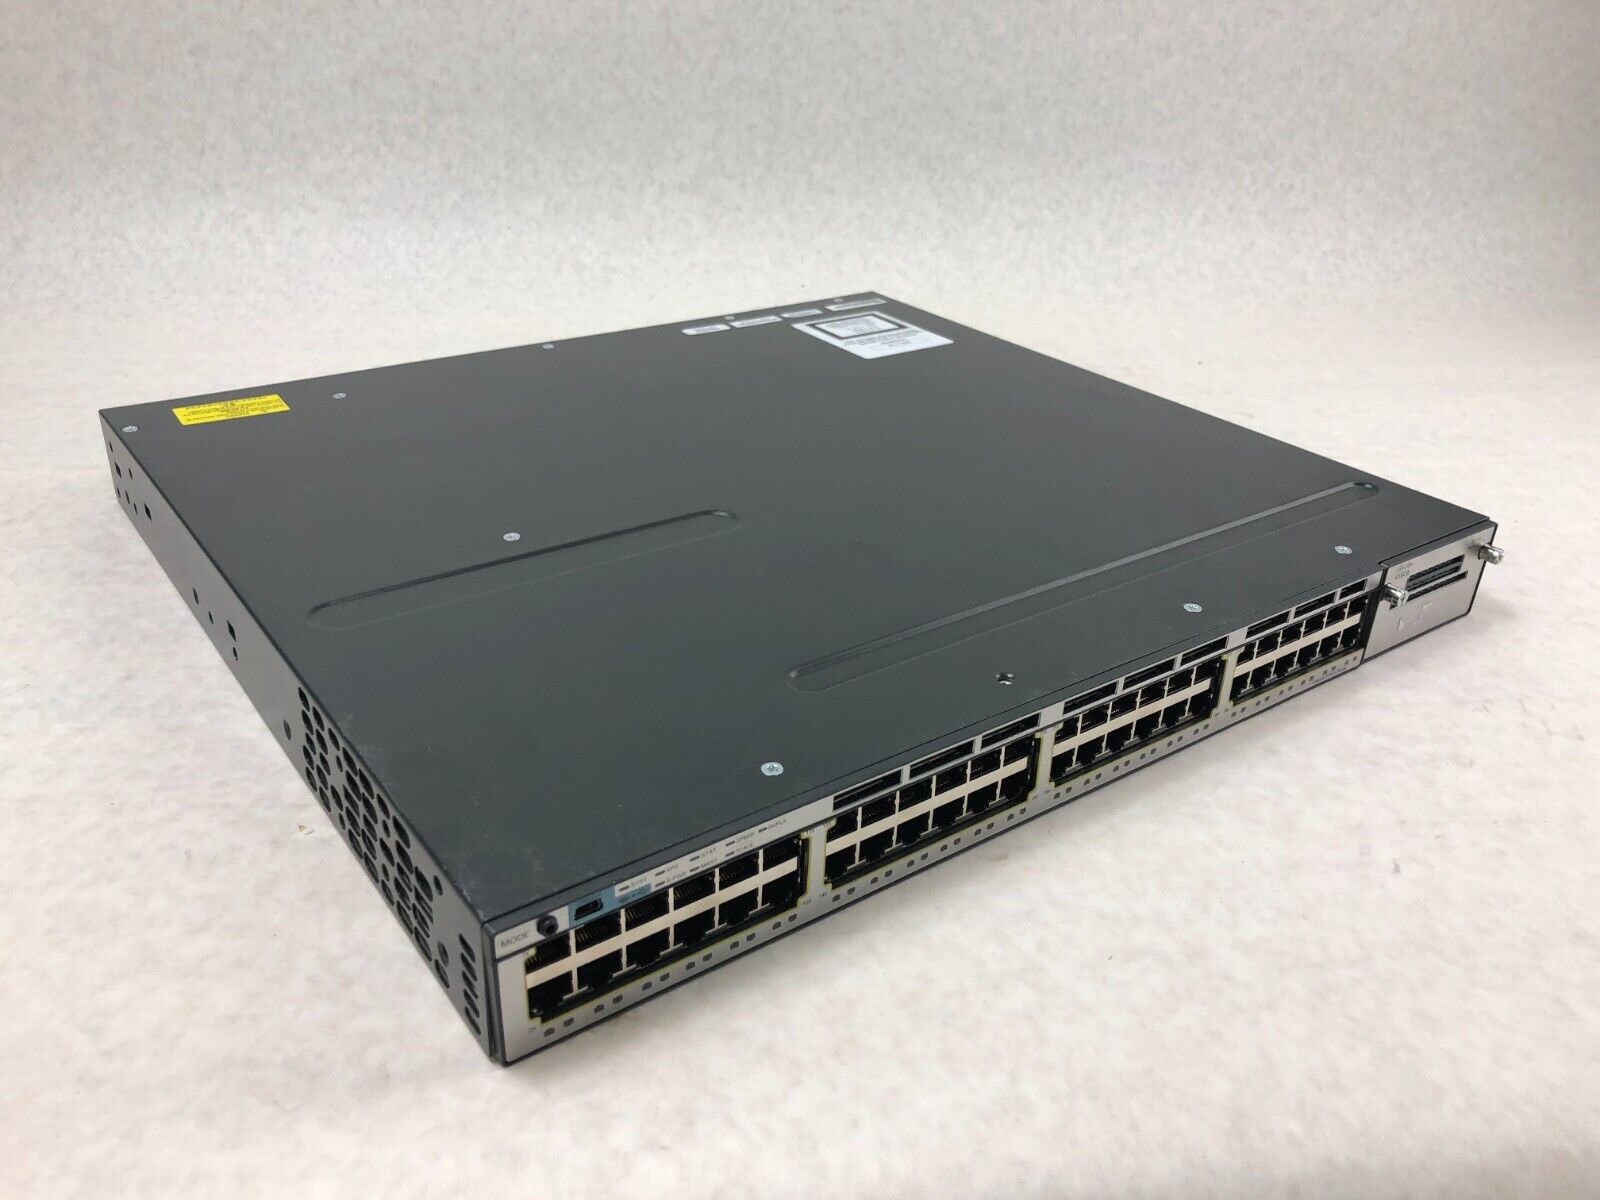 Cisco Catalyst WS-C3750X-48T-S 48 x Gigabit Ethernet 4 x SFP Managed Switch